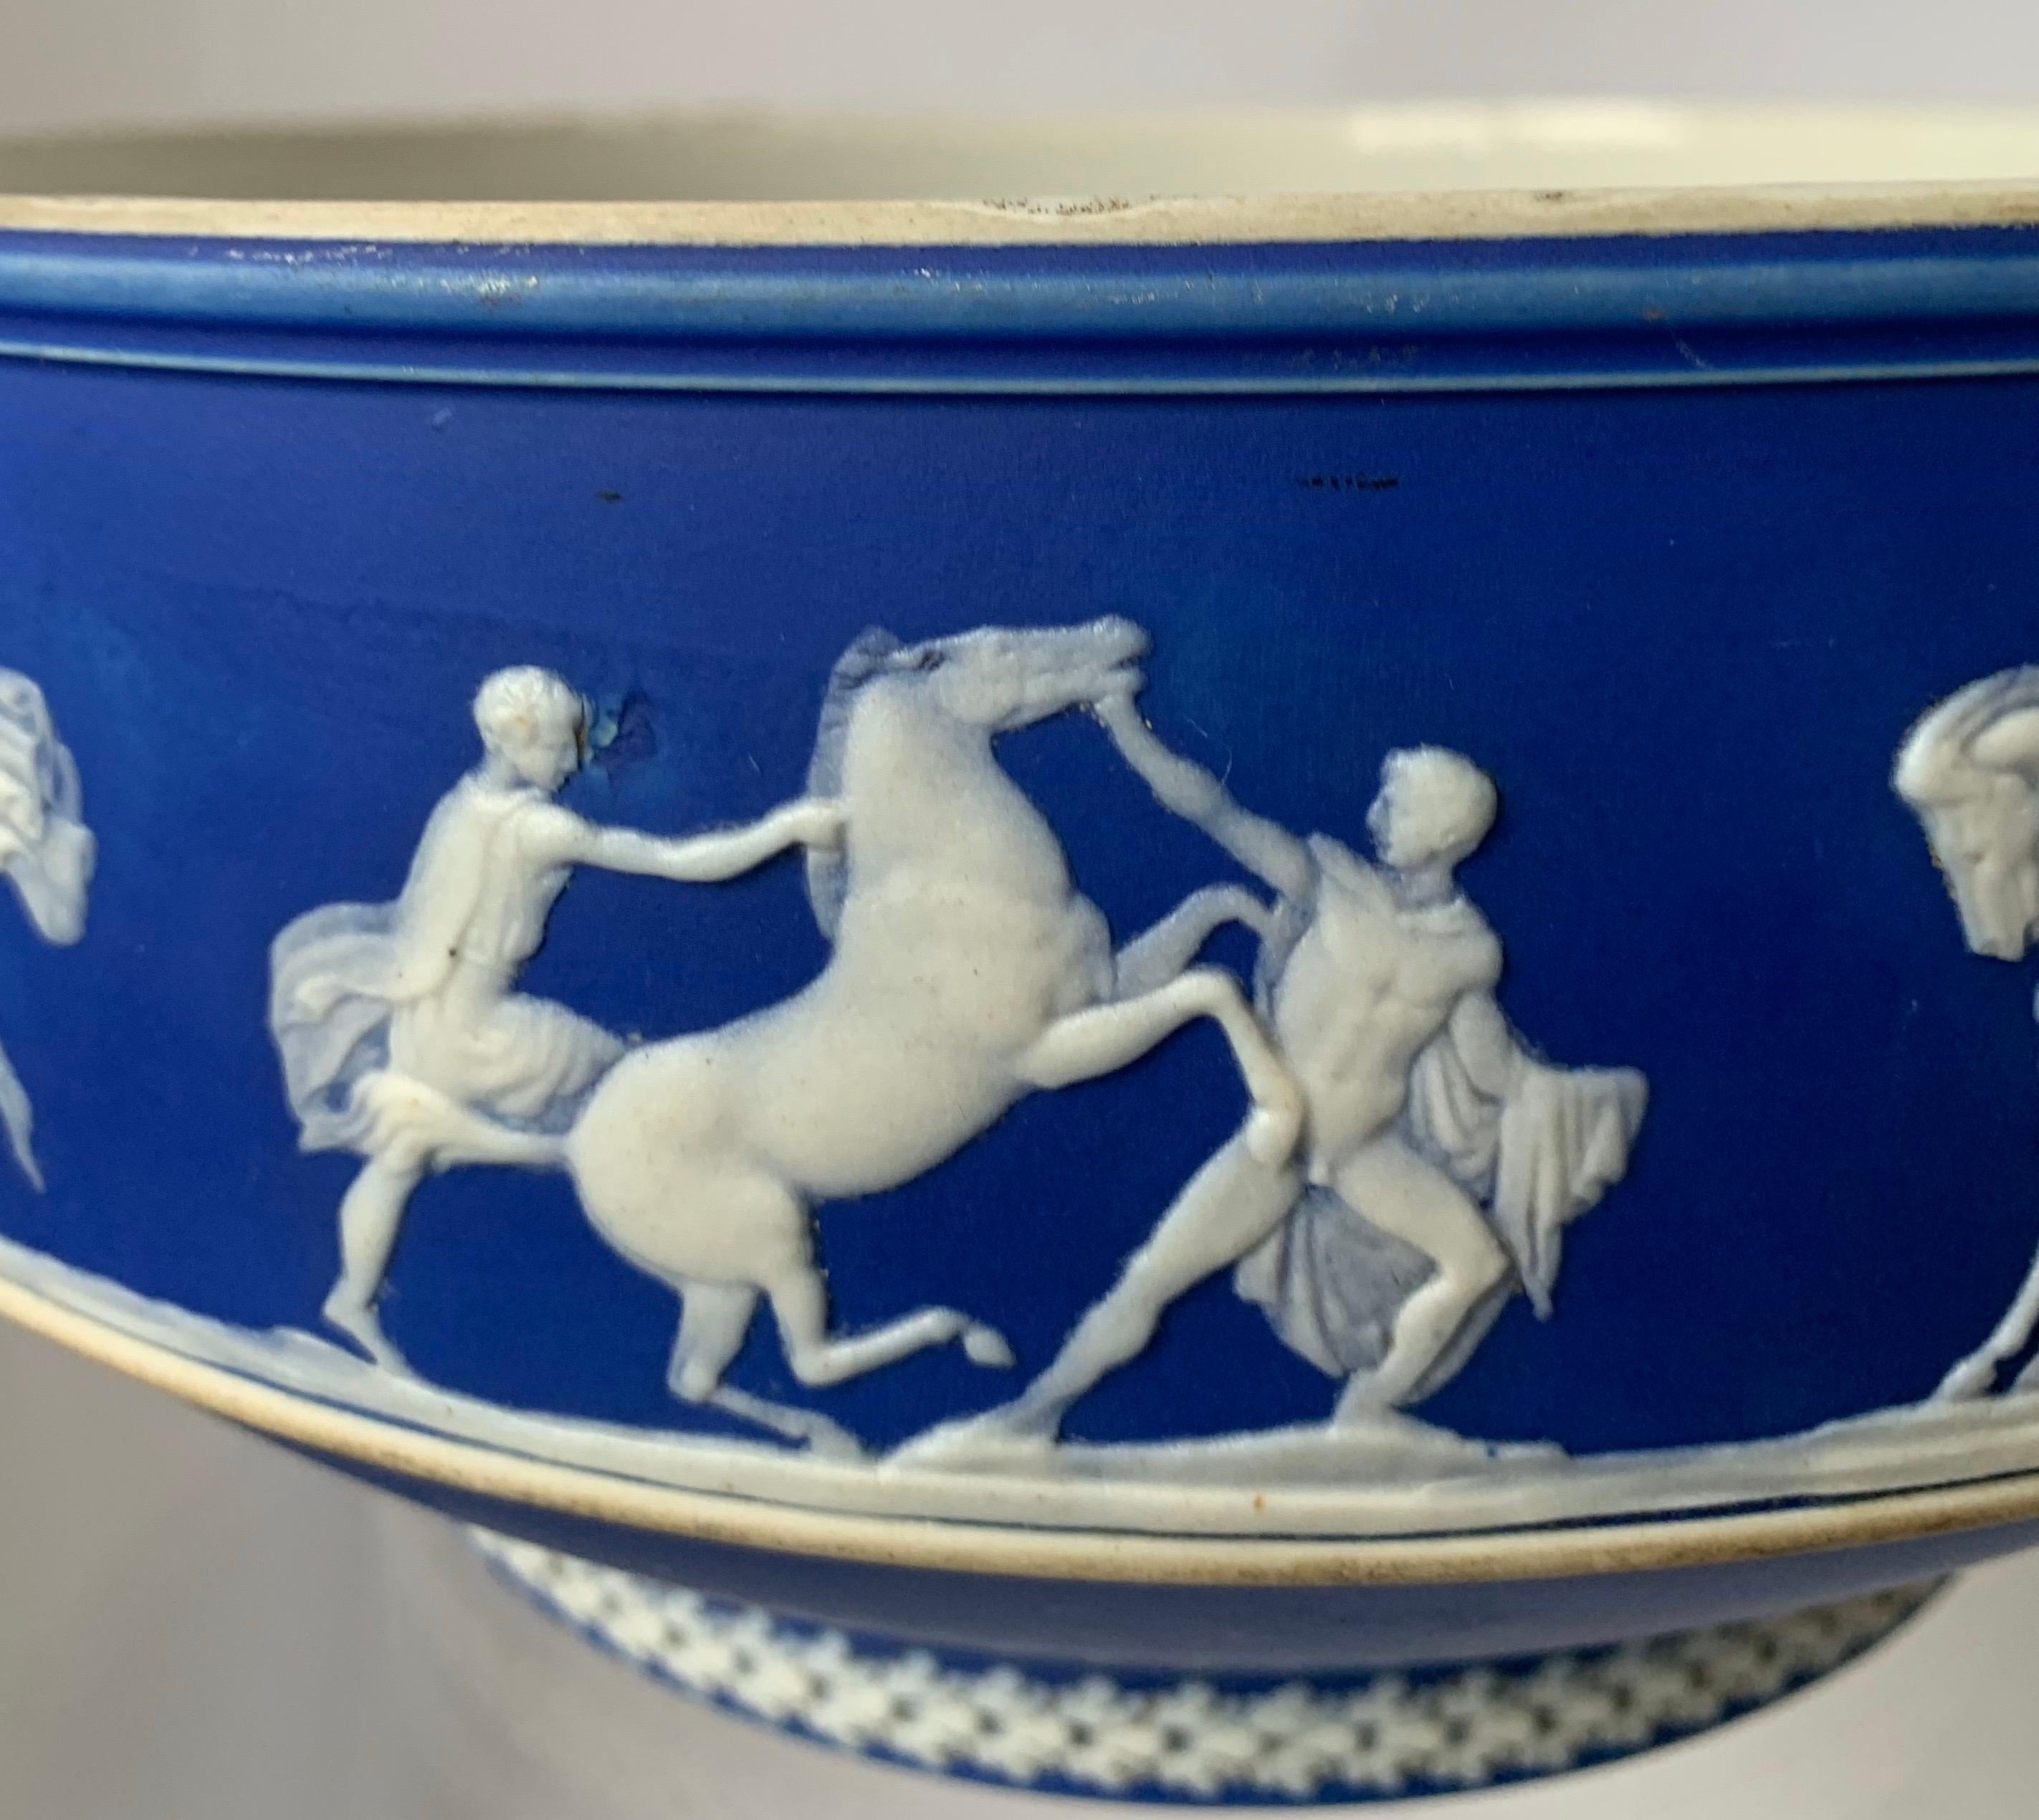 1930s Wedgwood jasperware bowl. Dark blue jasperware with all-over white neoclassical motif. Interior of the bowl is glazed.